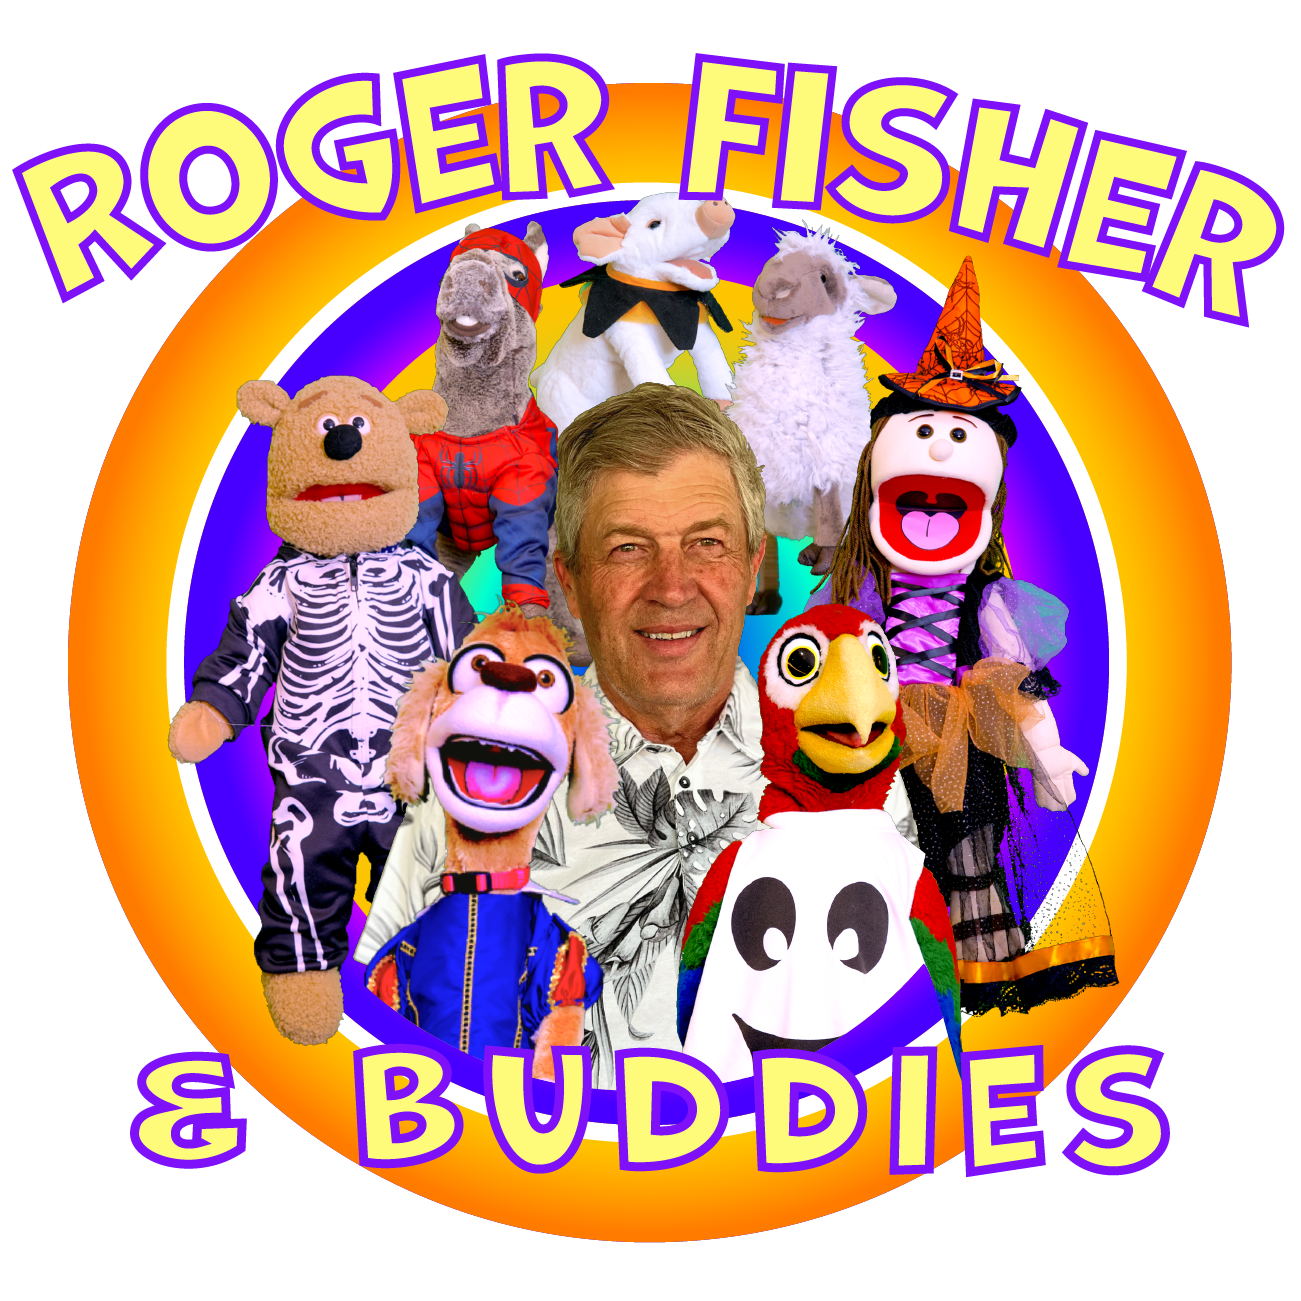 Roger Fisher & Buddies